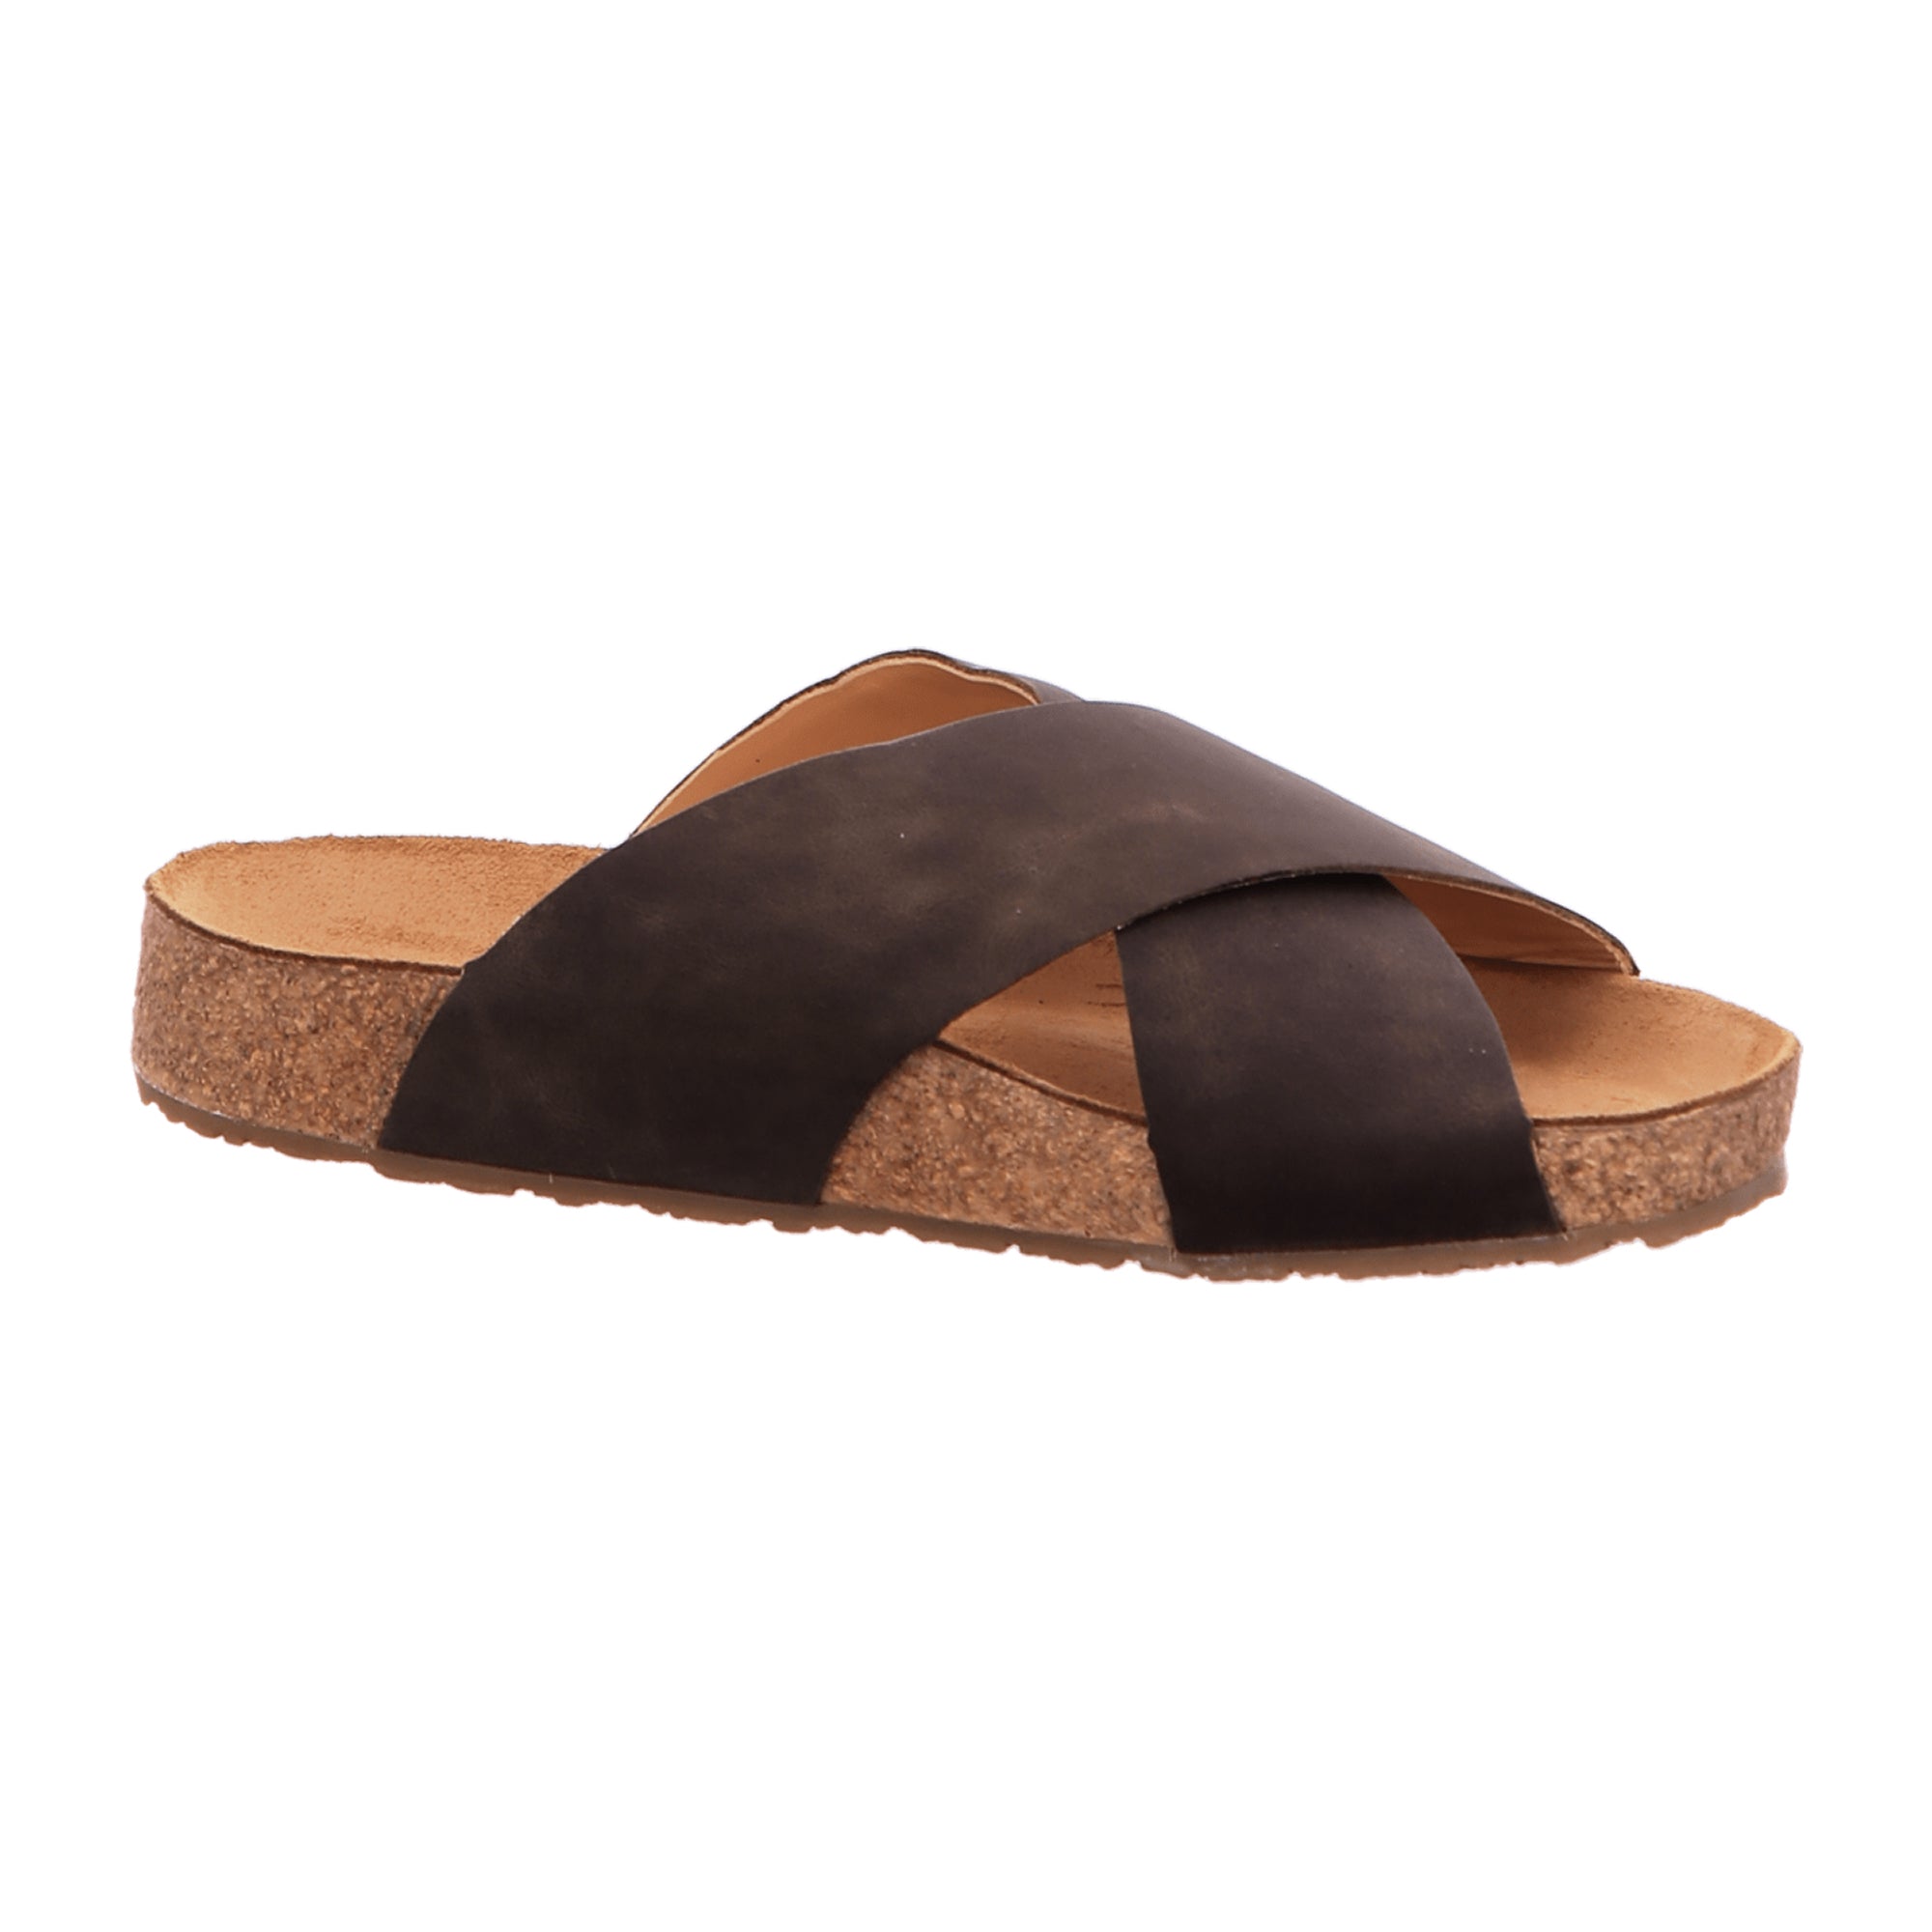 Haflinger 819412 Women's Brown Comfort Slippers - Stylish & Durable